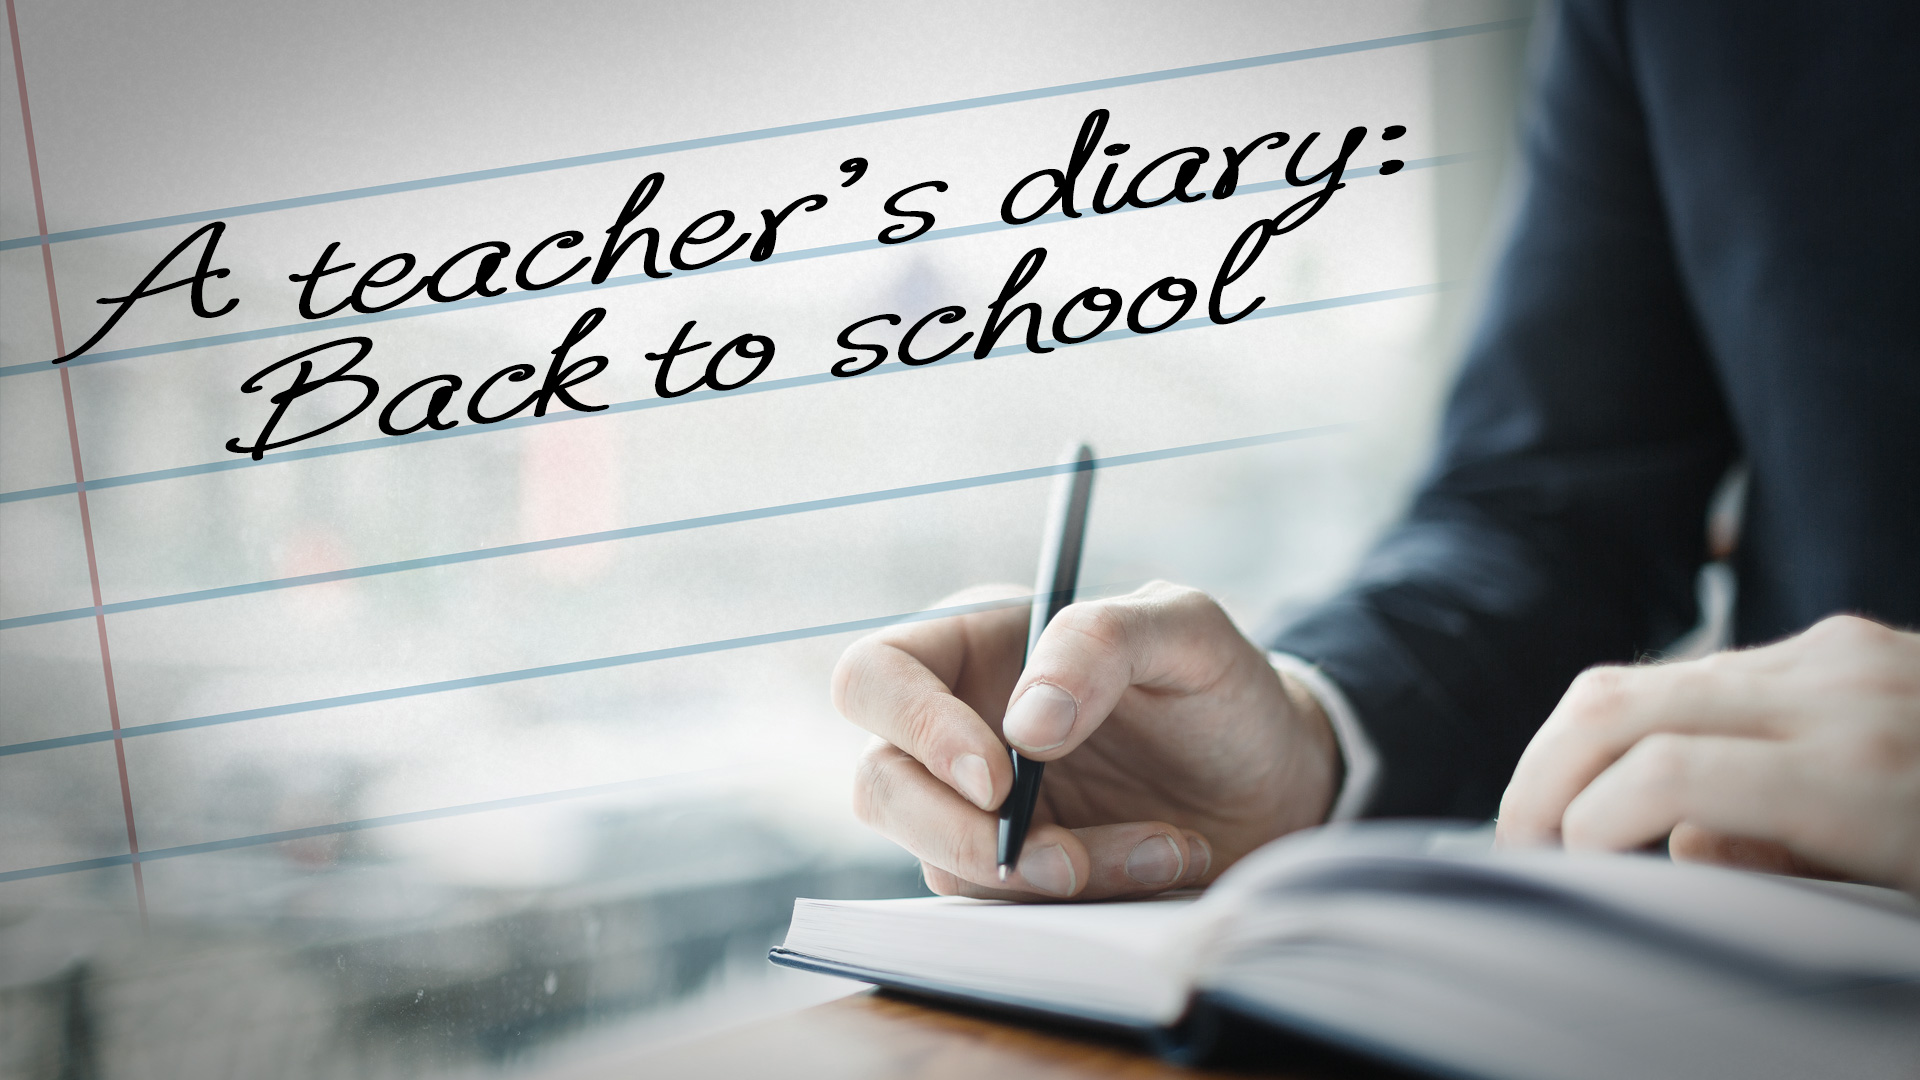 A Teacher's Diary: Rachel Detemple